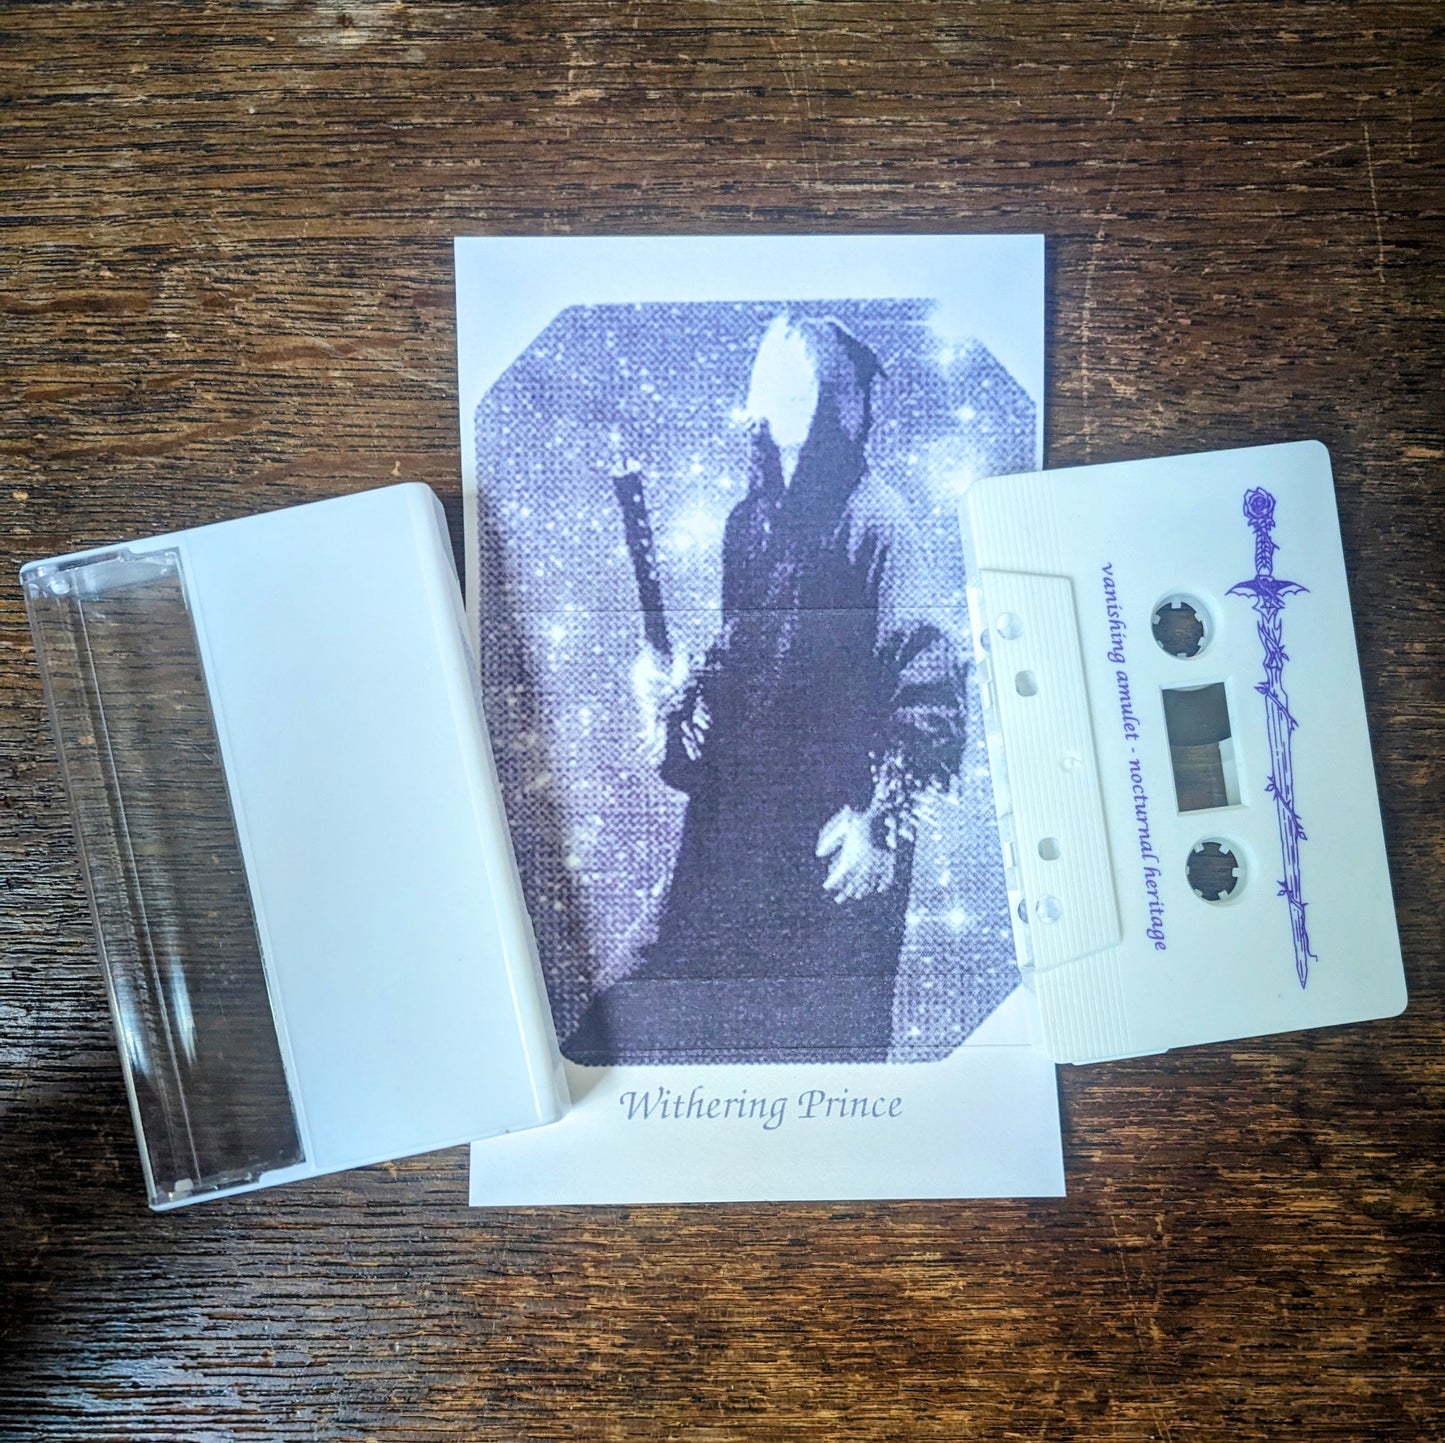 VANISHING AMULET "Nocturnal Heritage" Cassette Tape (lim.200)